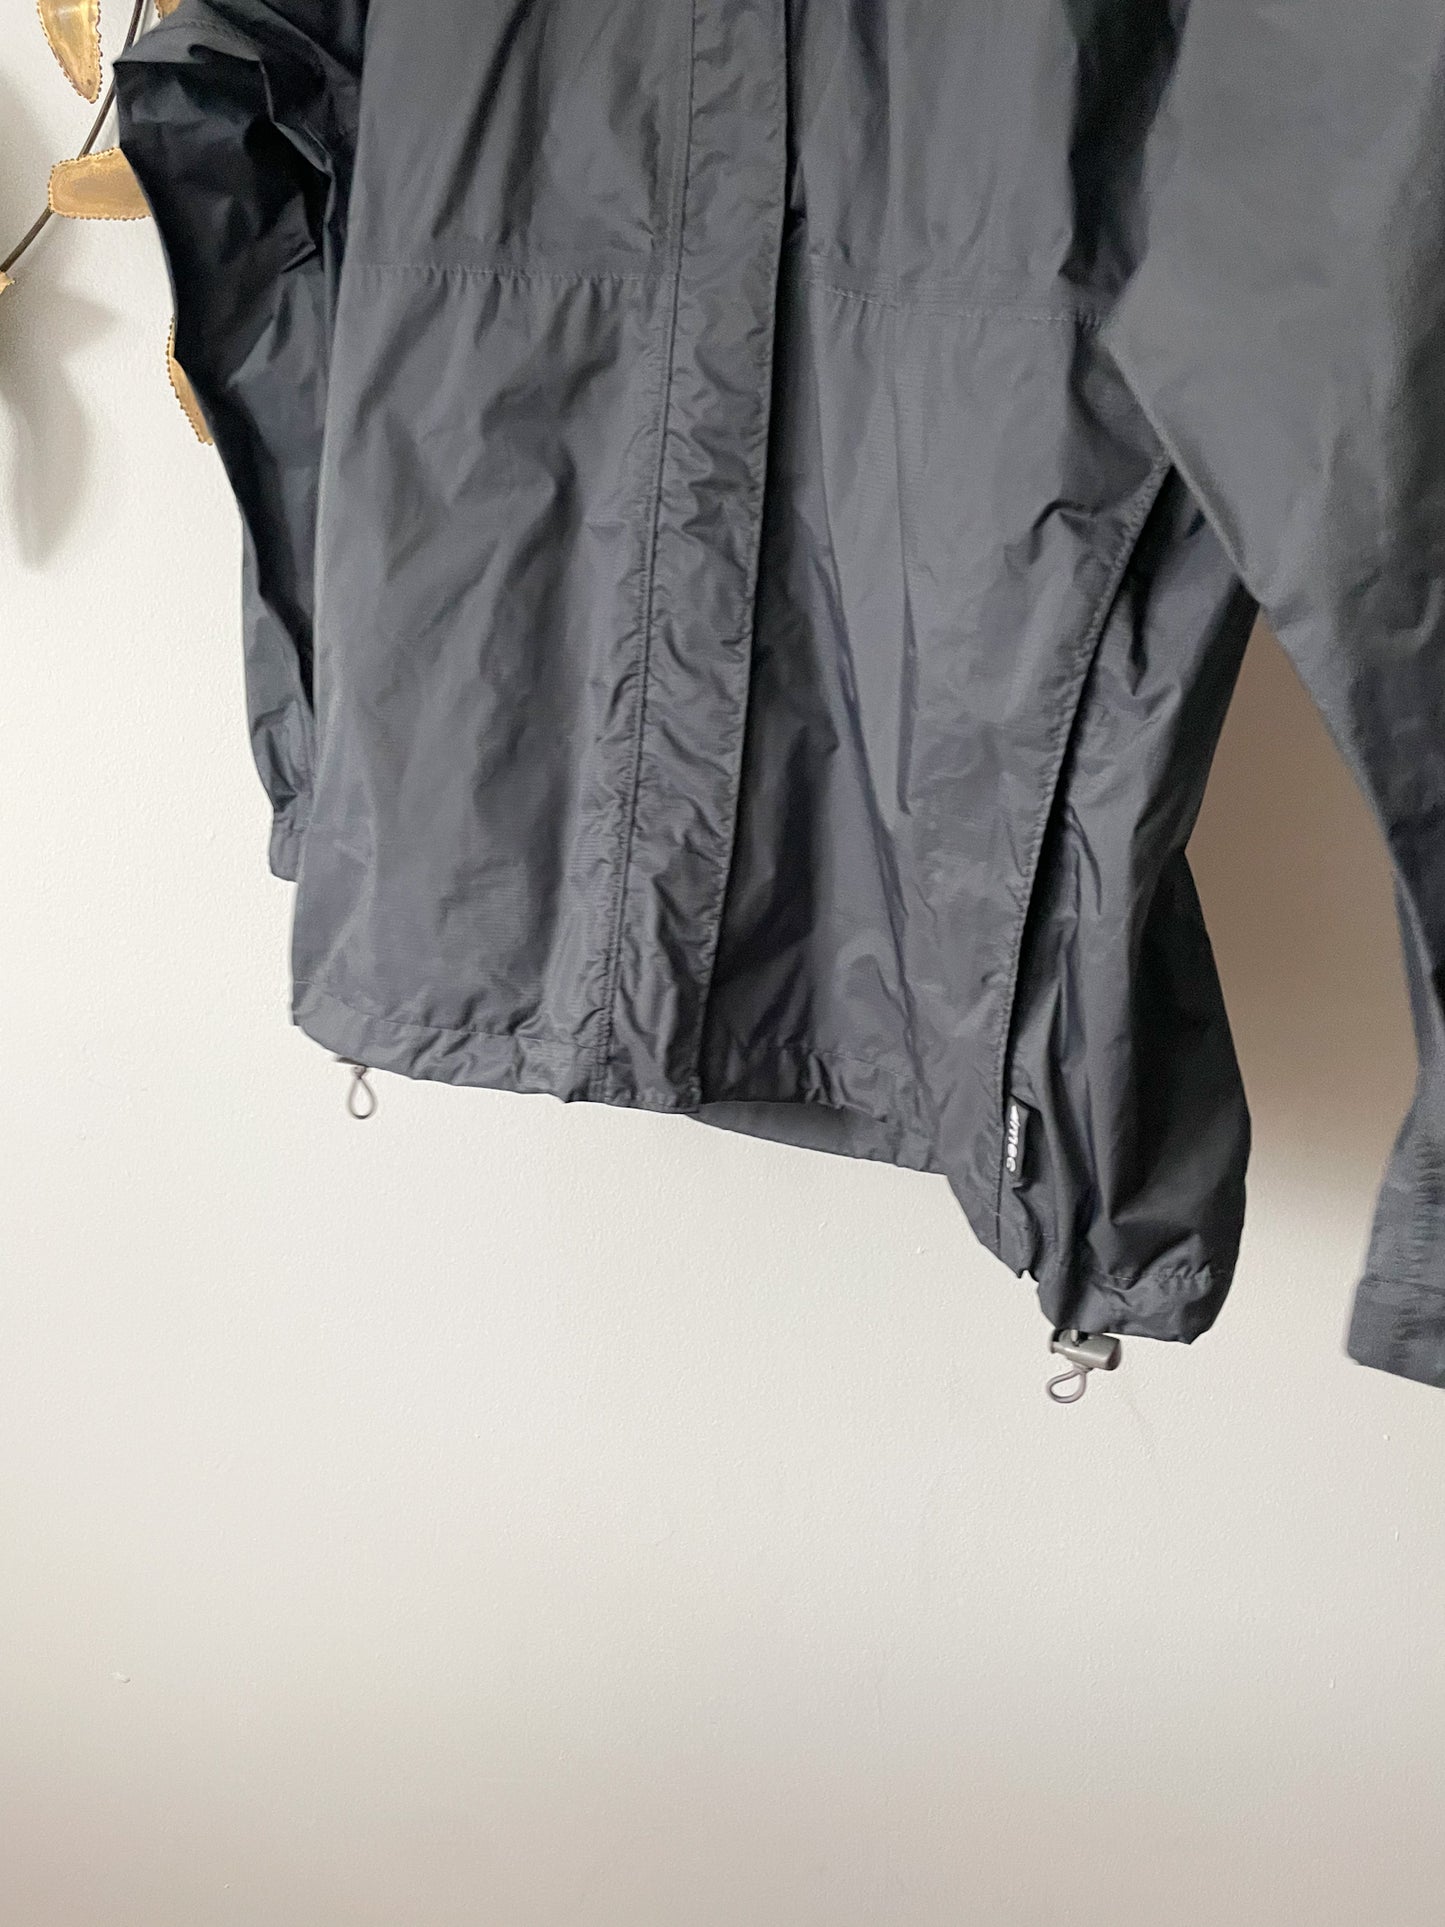 MEC Blue Grey Aquanator Rain Jacket - Women's - Size Large